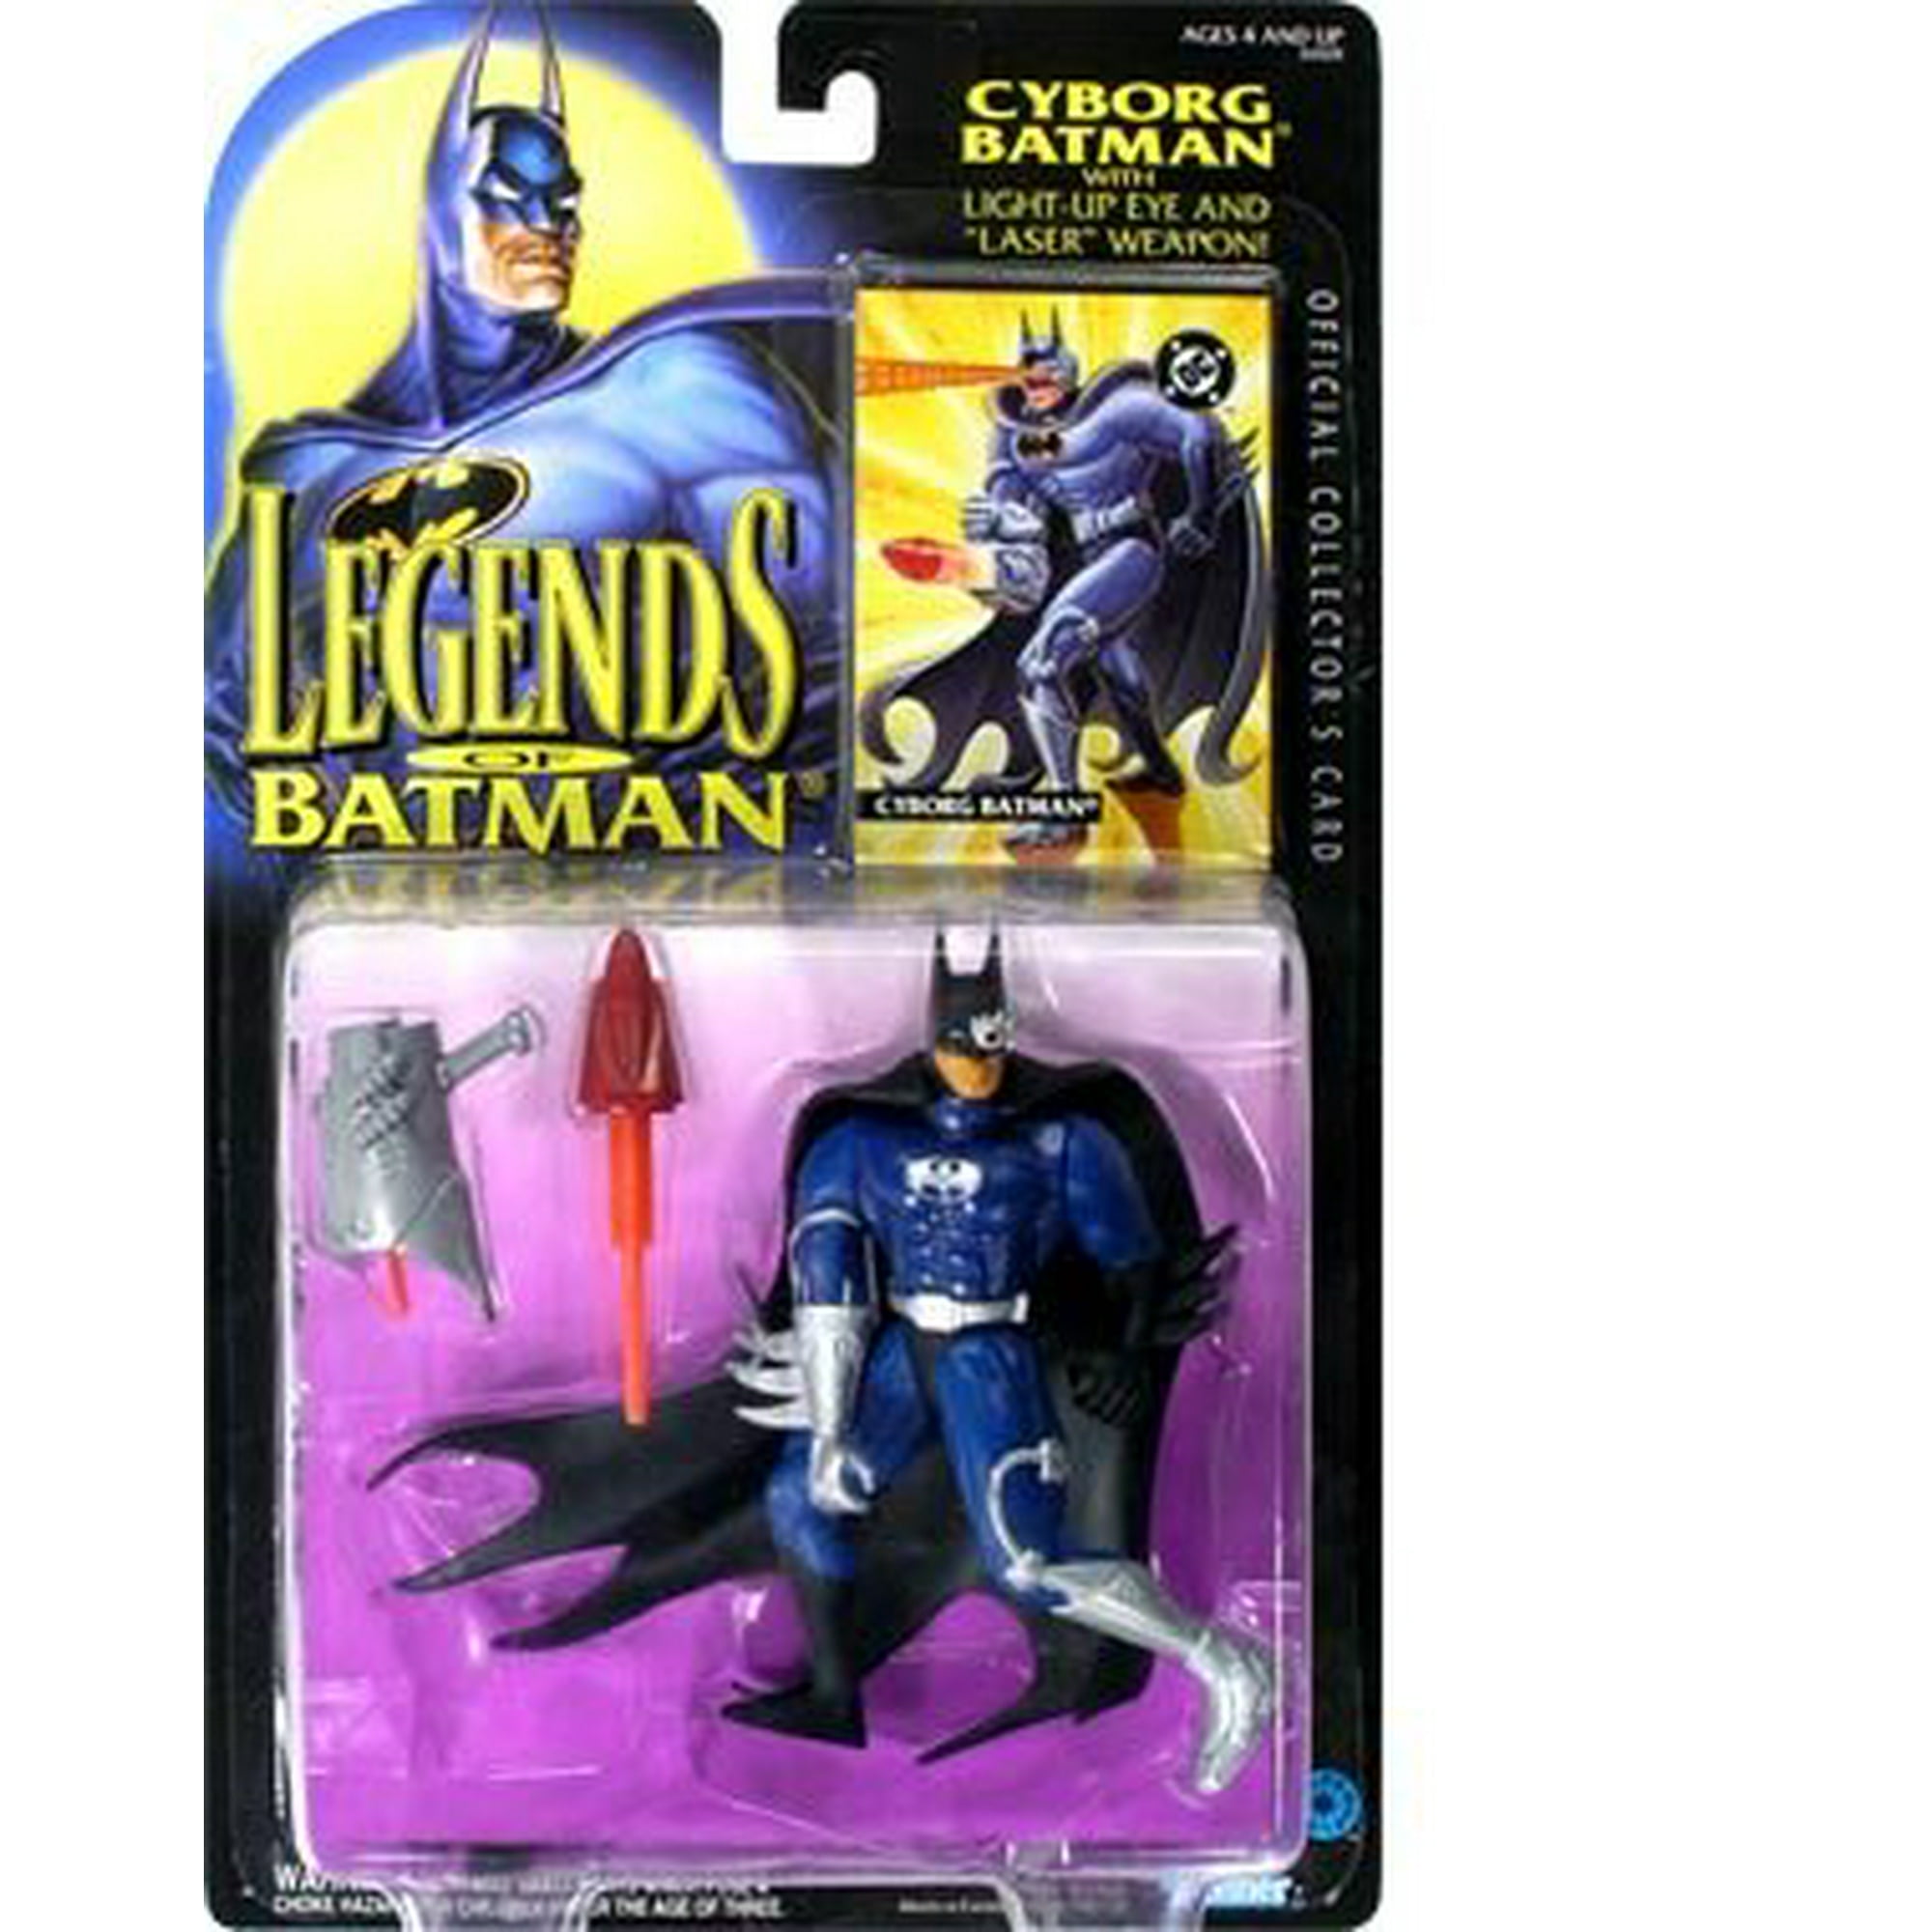 Legends of Batman Cyborg Batman Action Figure | Walmart Canada